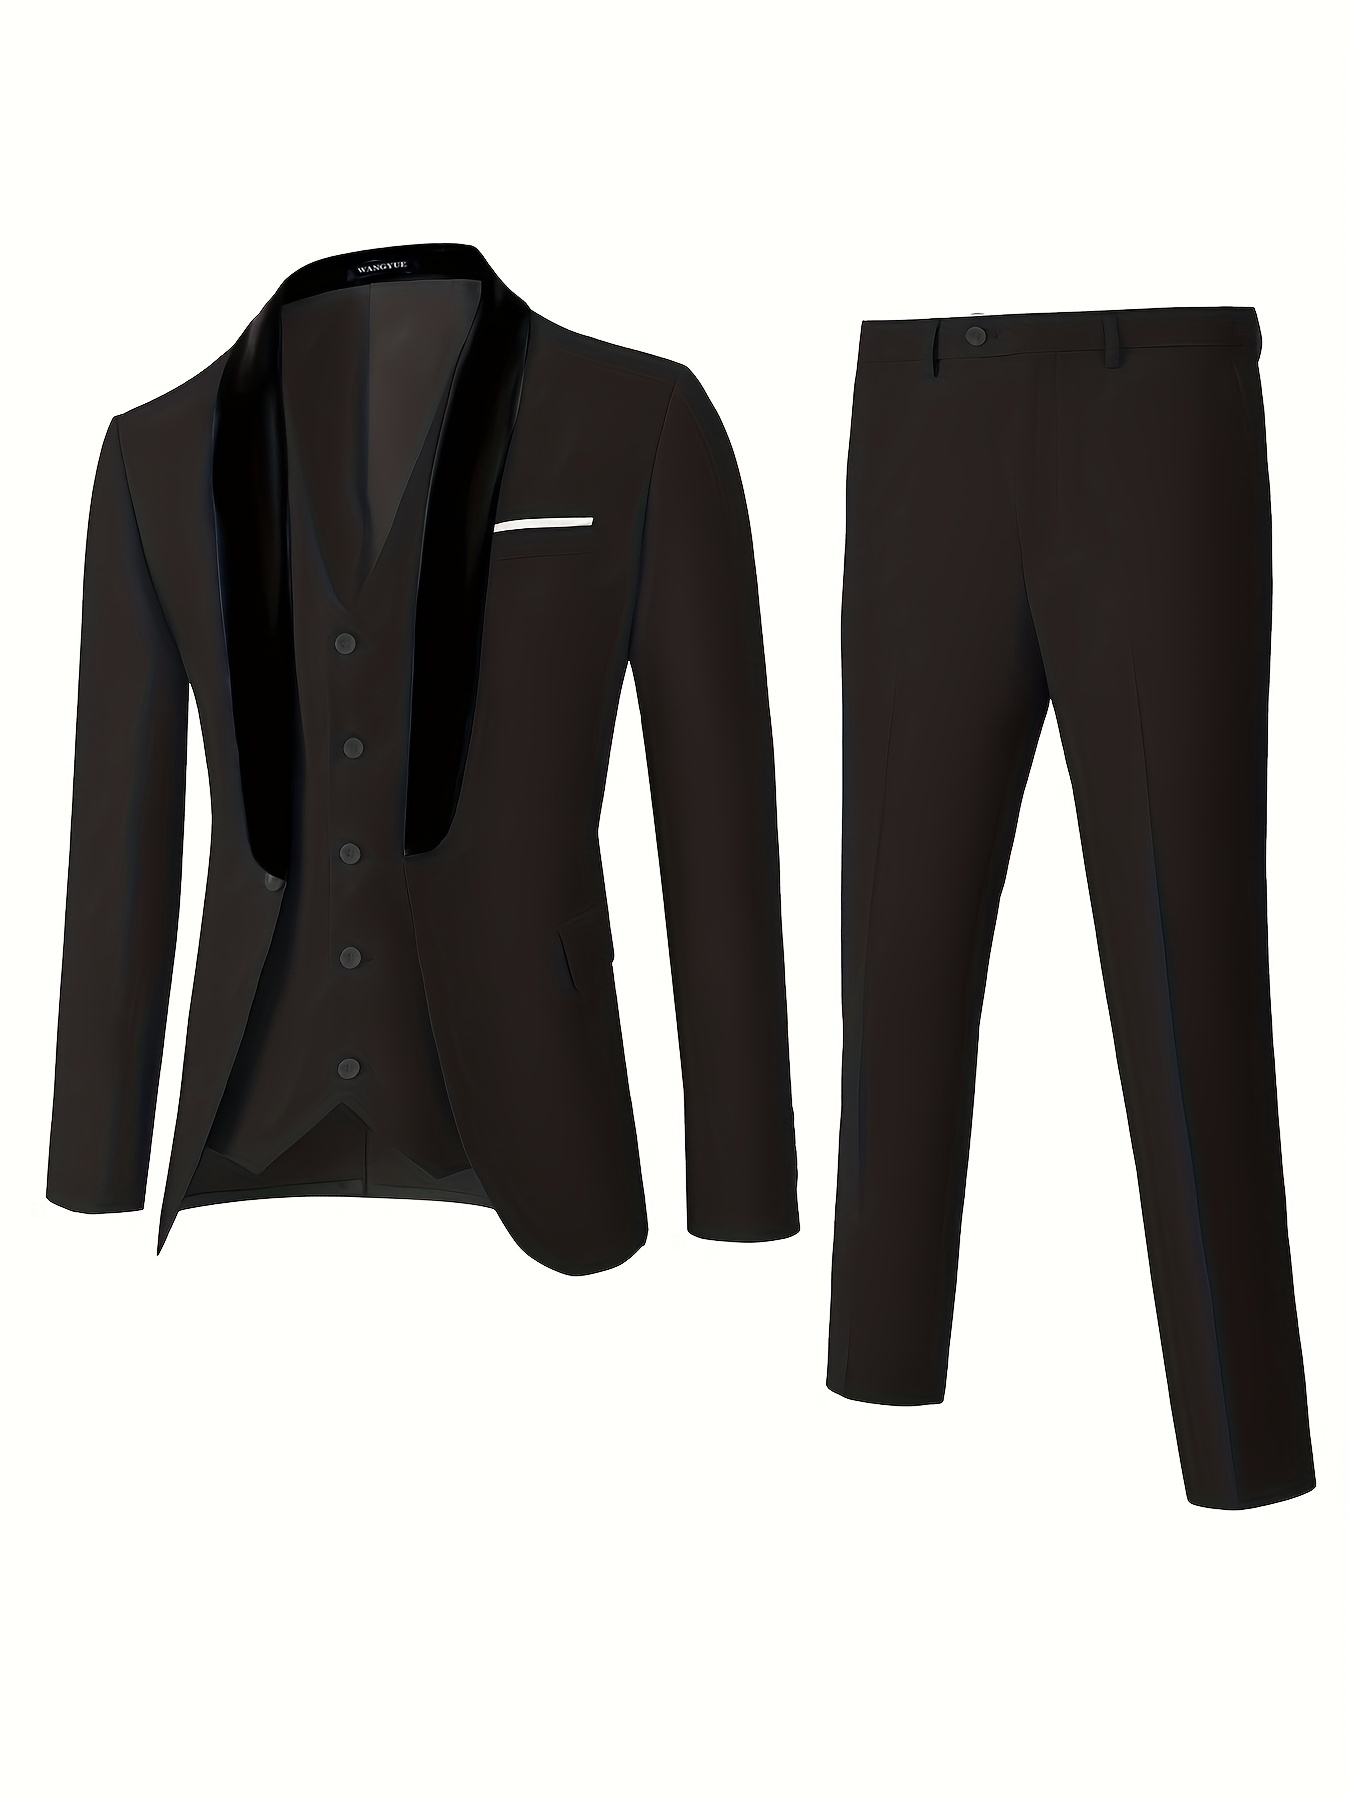 Men's Black Tuxedos With Belt, 2 Piece Suit Tuxedo Formal Fashion Style  Suits Wedding Party Suits Elegant Suits Formal Fashion Suit. -  Canada